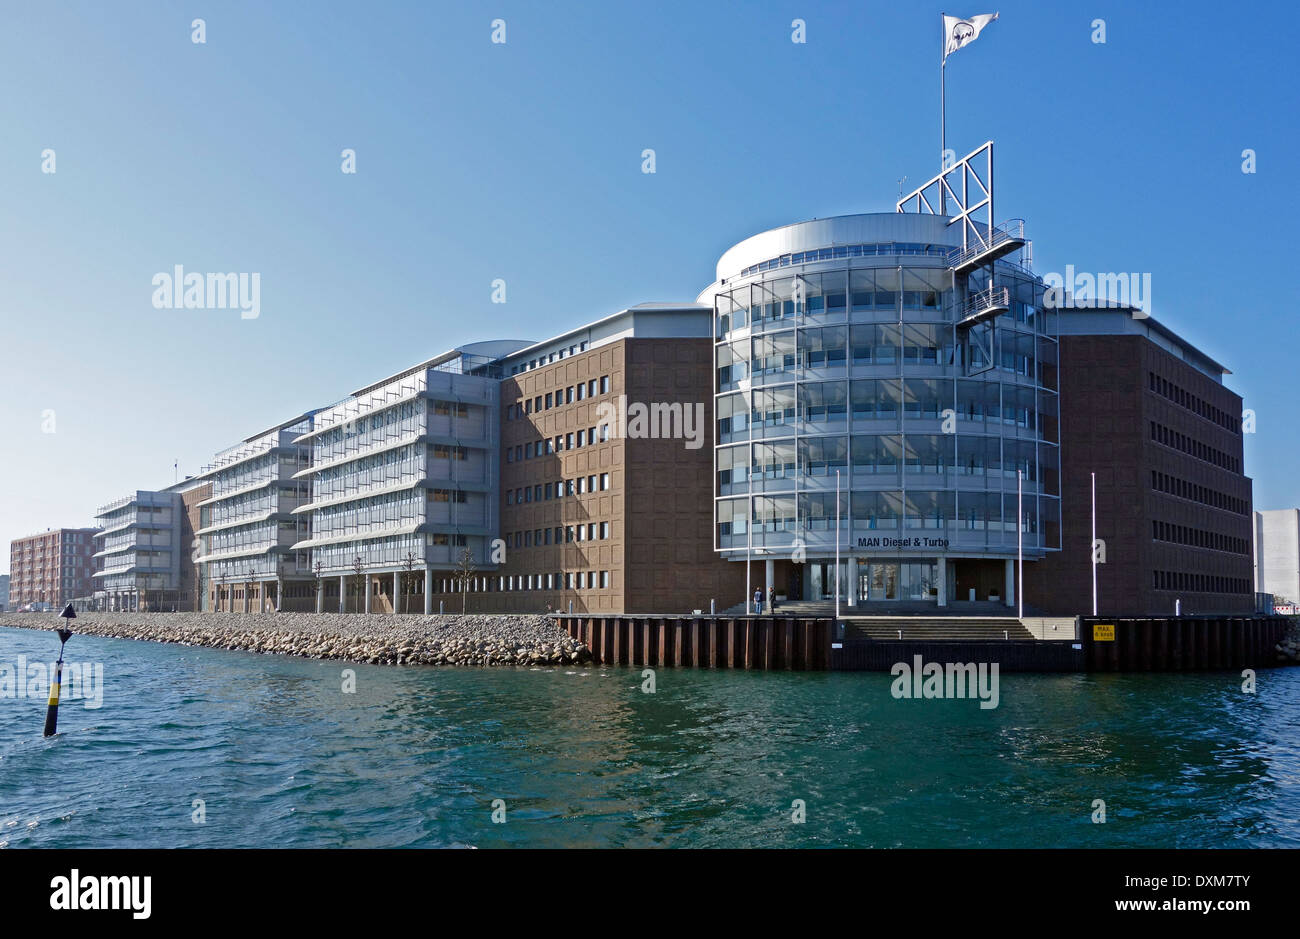 Man Diesel & Turbo building in Sydhavnen Copenhagen Denmark Stock Photo -  Alamy